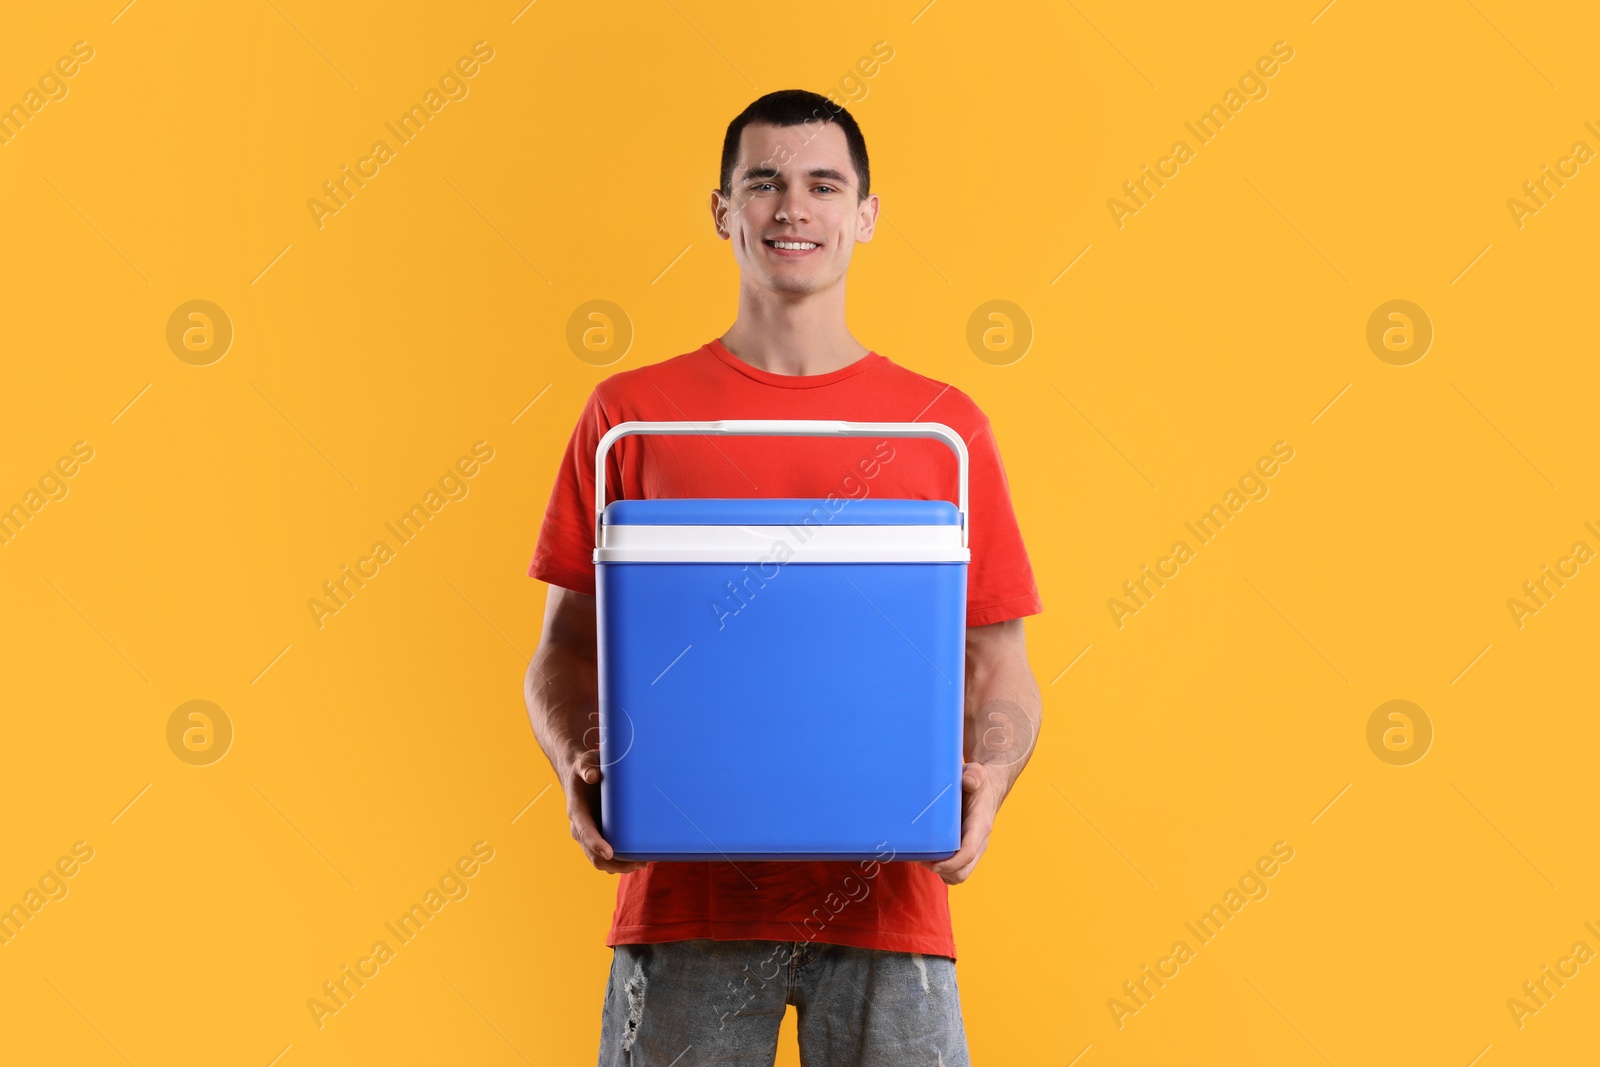 Photo of Man with blue cool box on orange background